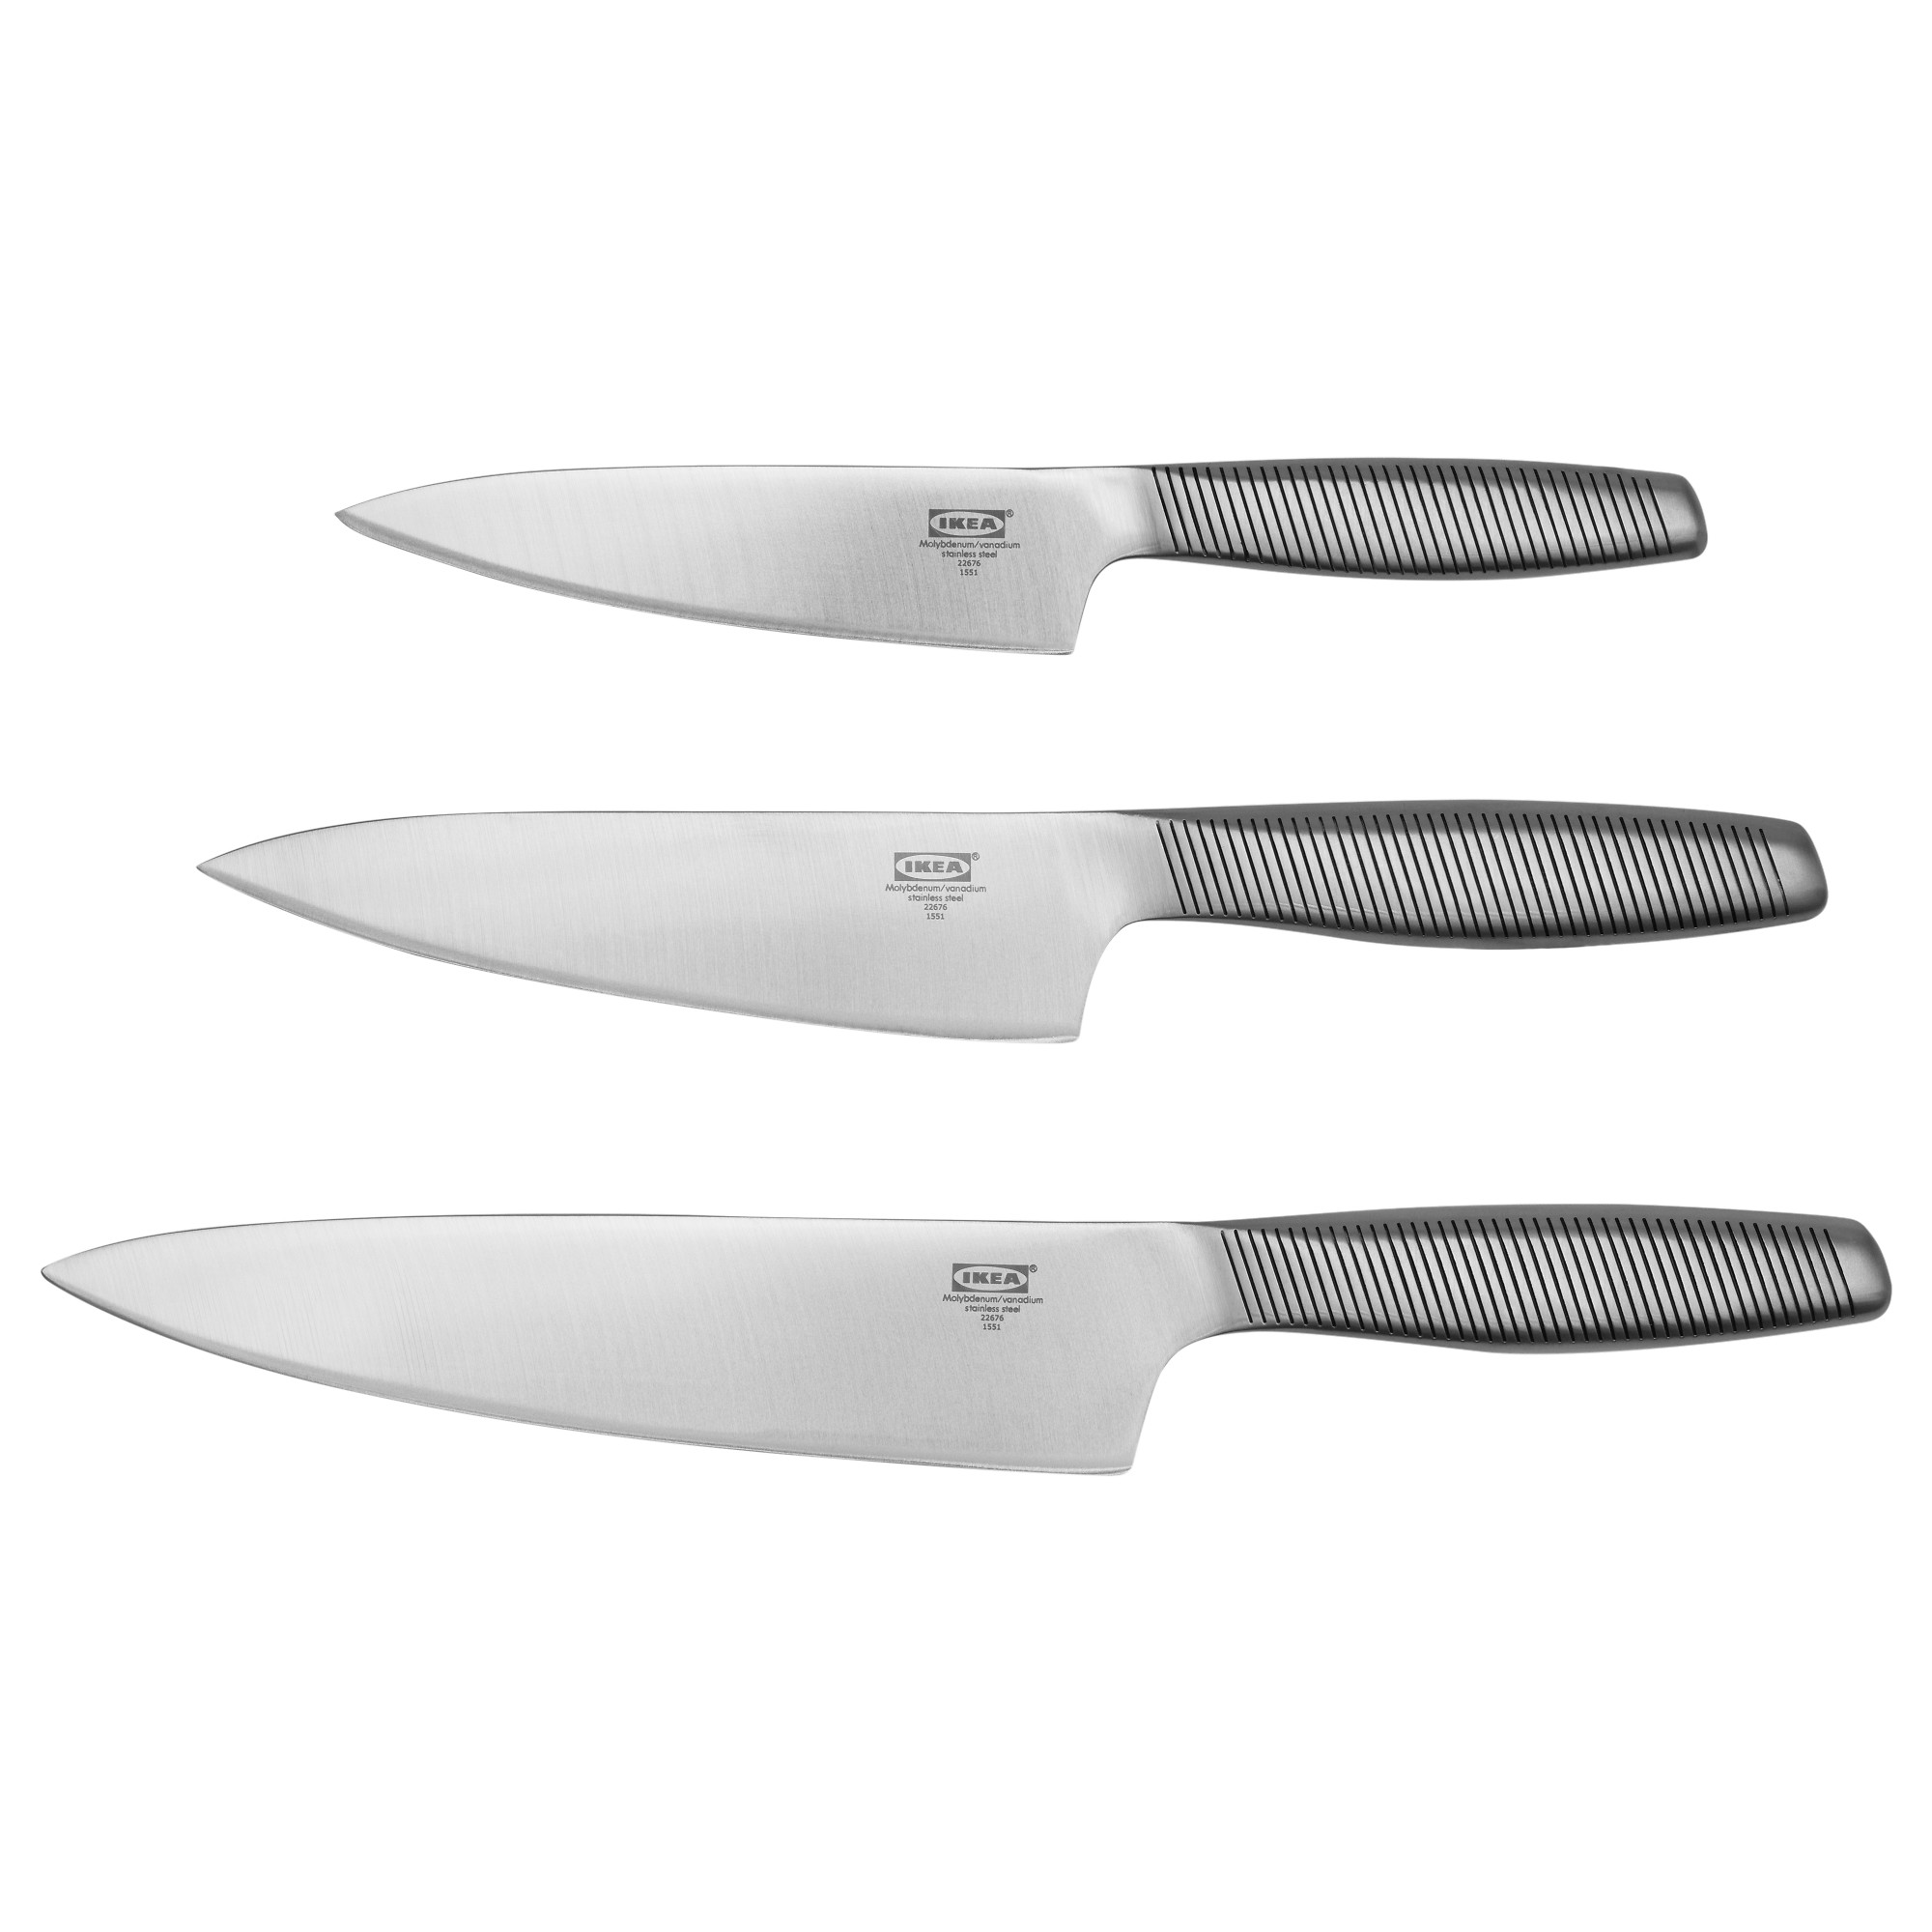 IKEA 365+ 3-piece knife set